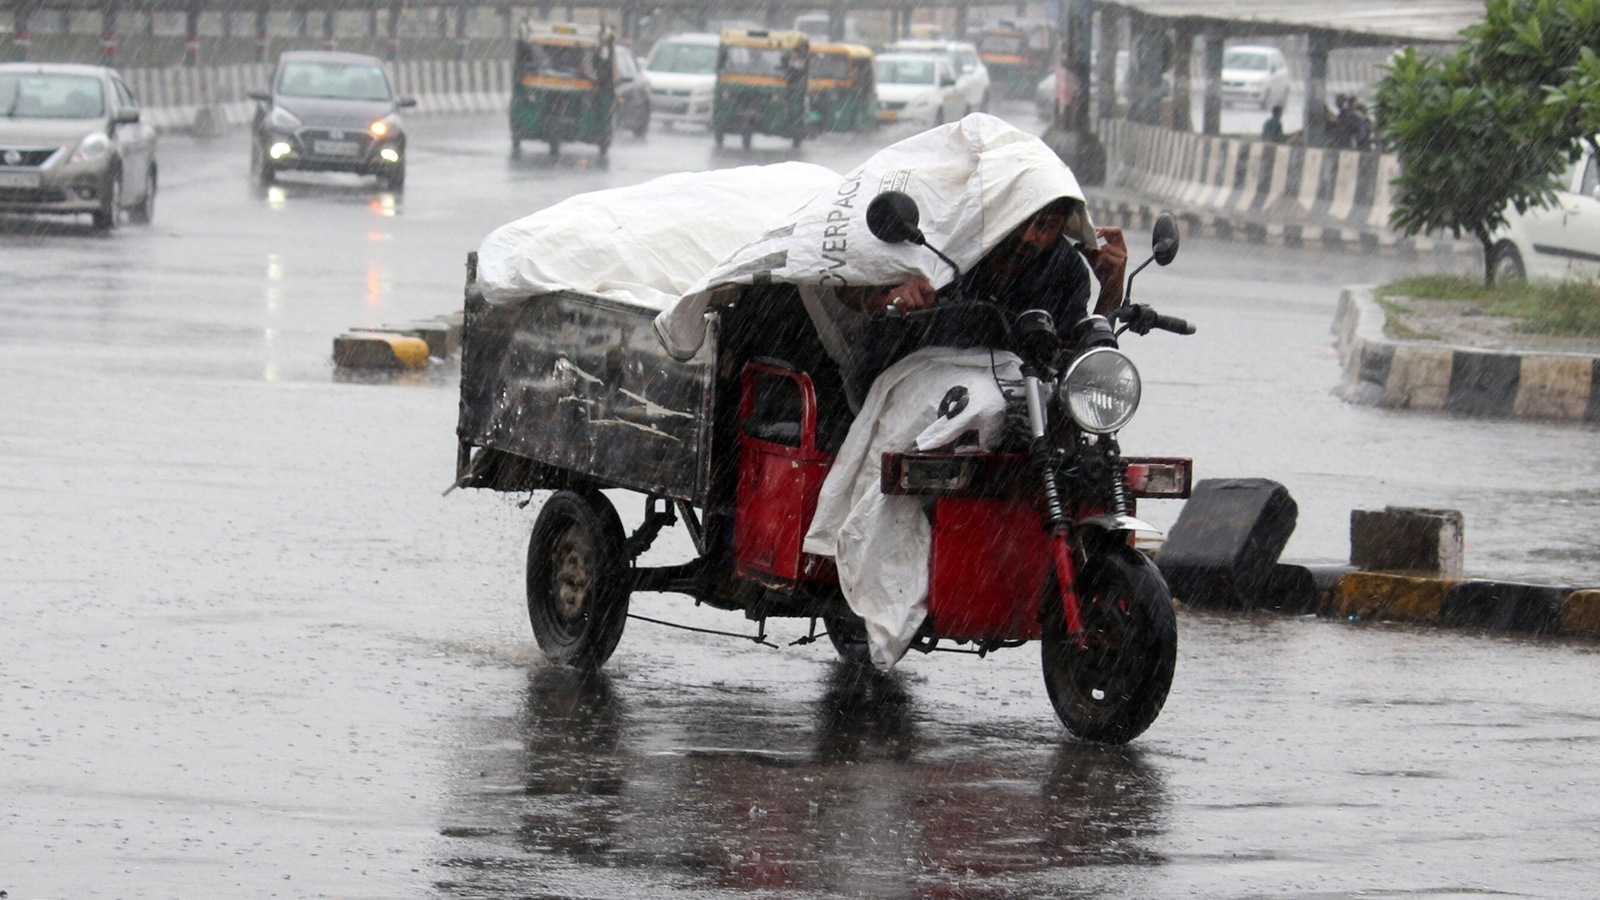 Yellow alert for parts of Maharashtra, rain continues to lash Delhi | Top 5 | Latest News India - Hindustan Times